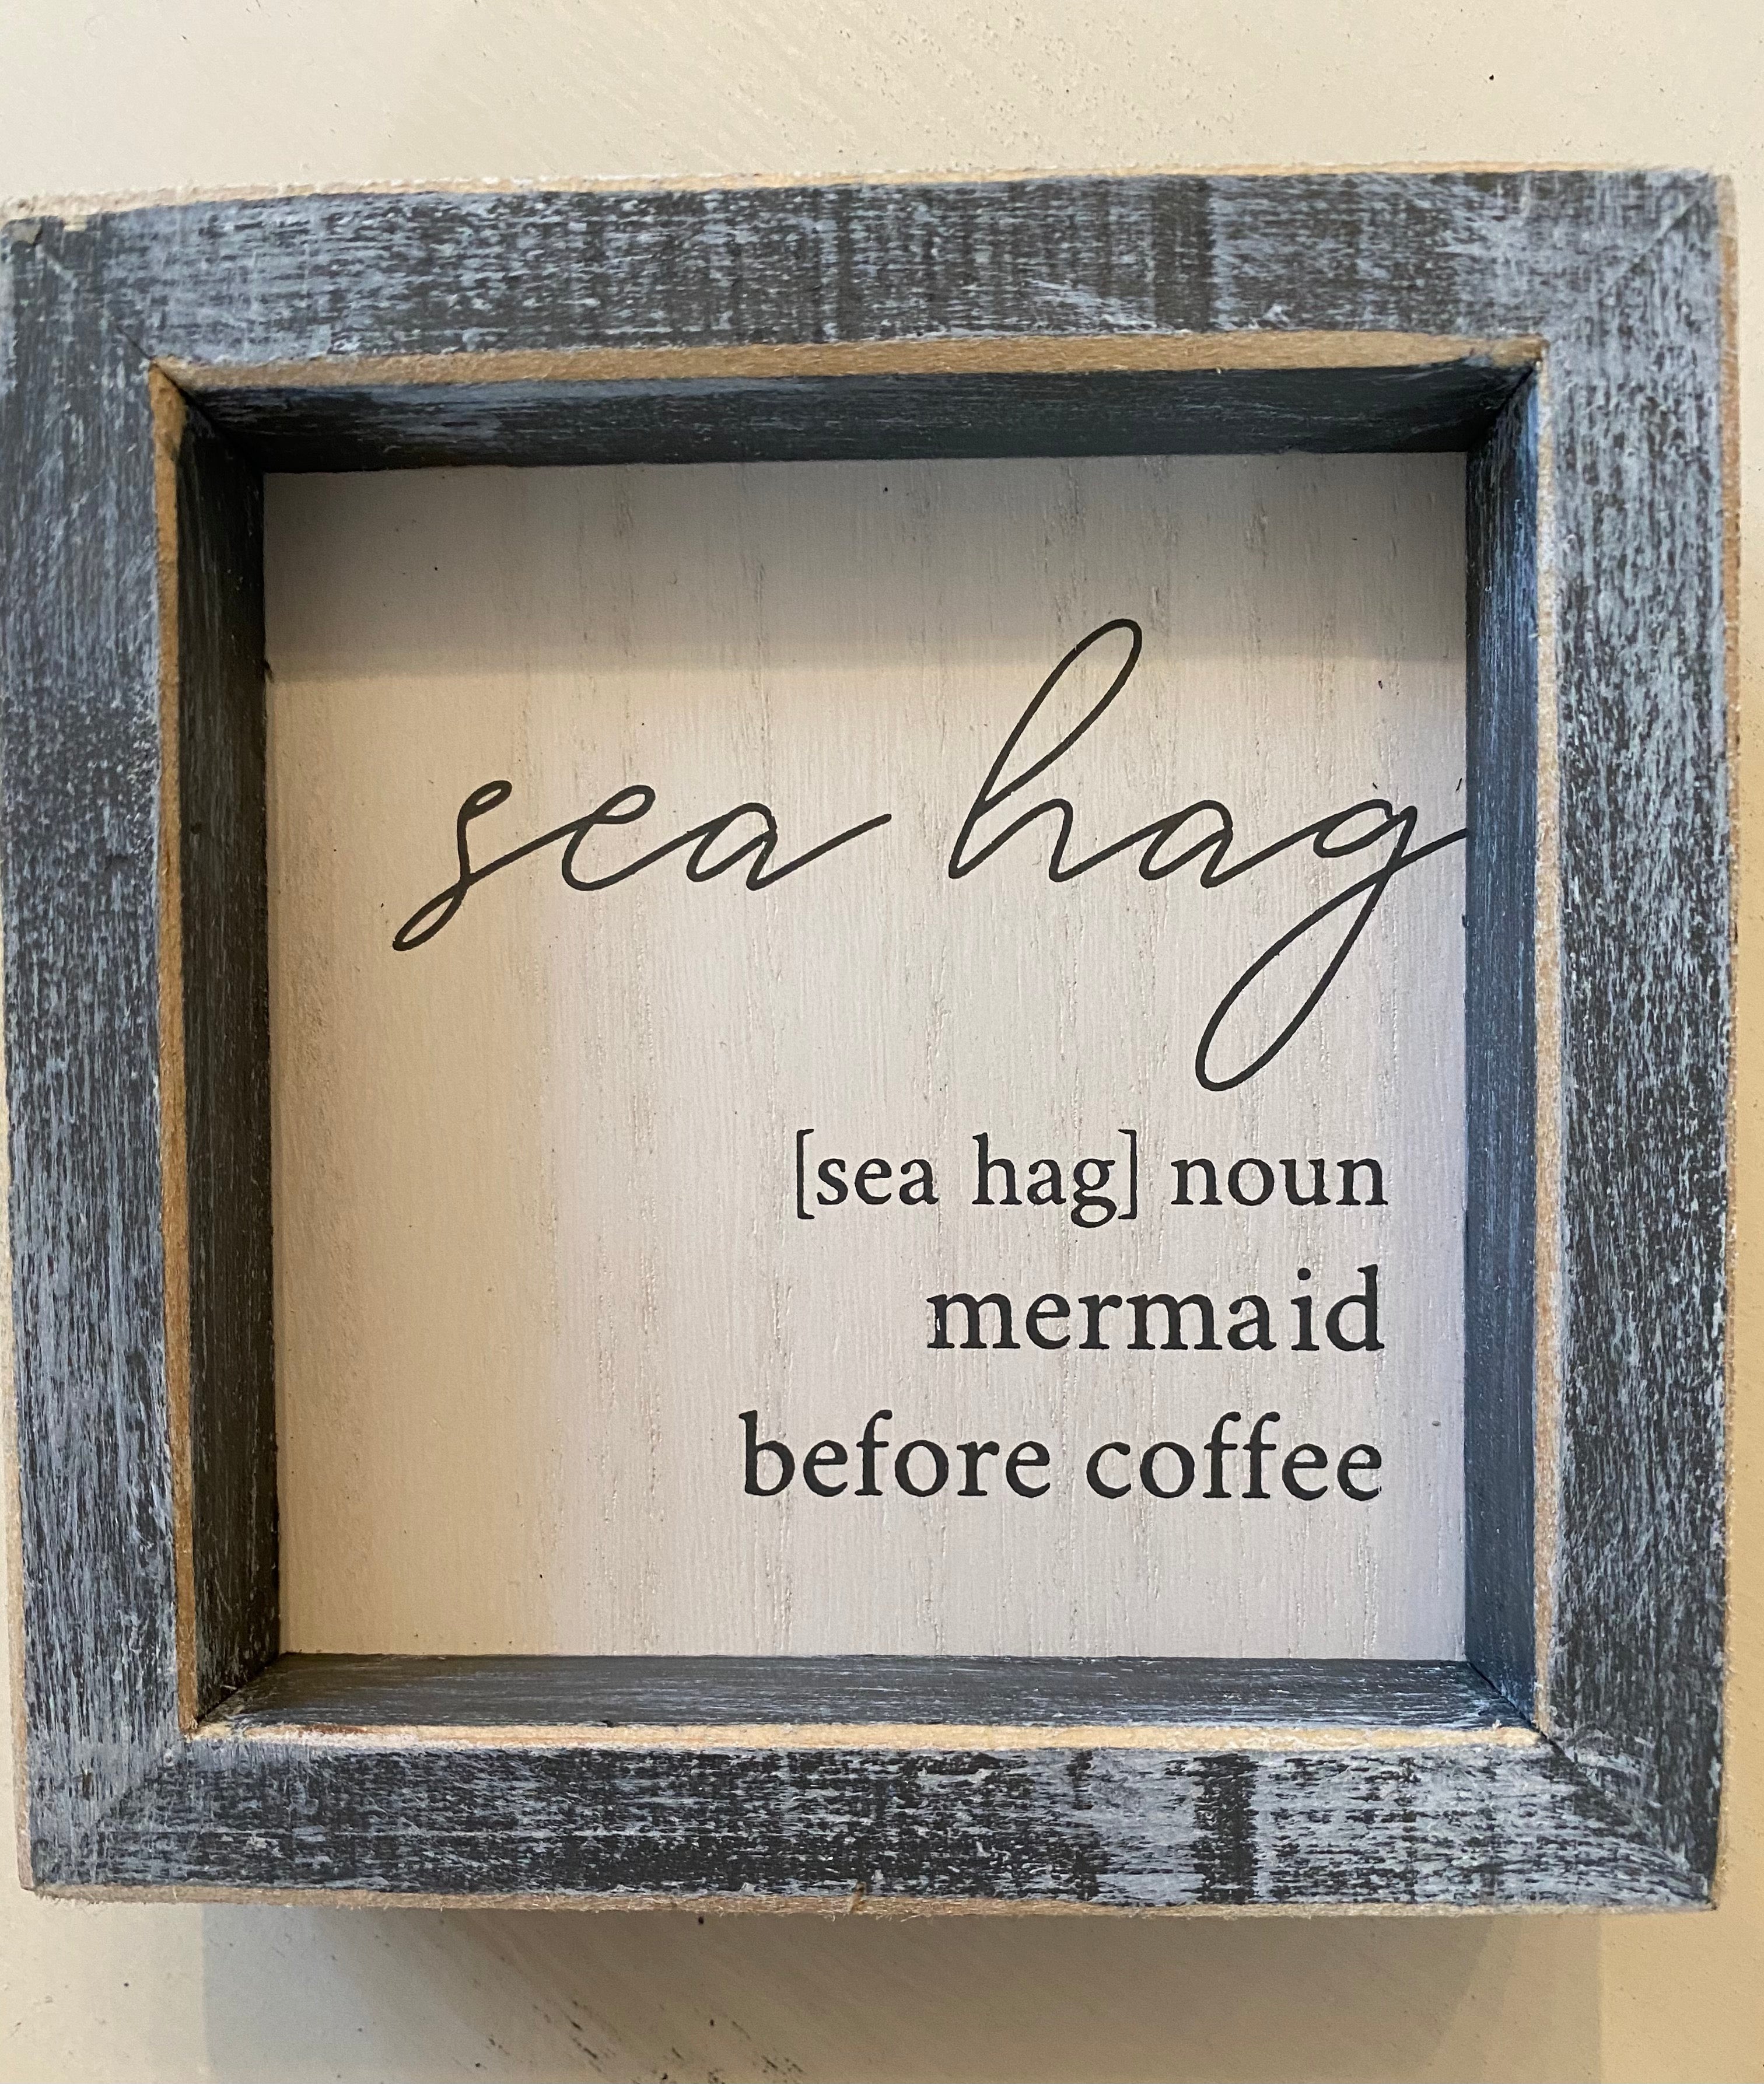 sea hag noun mermaid before coffee